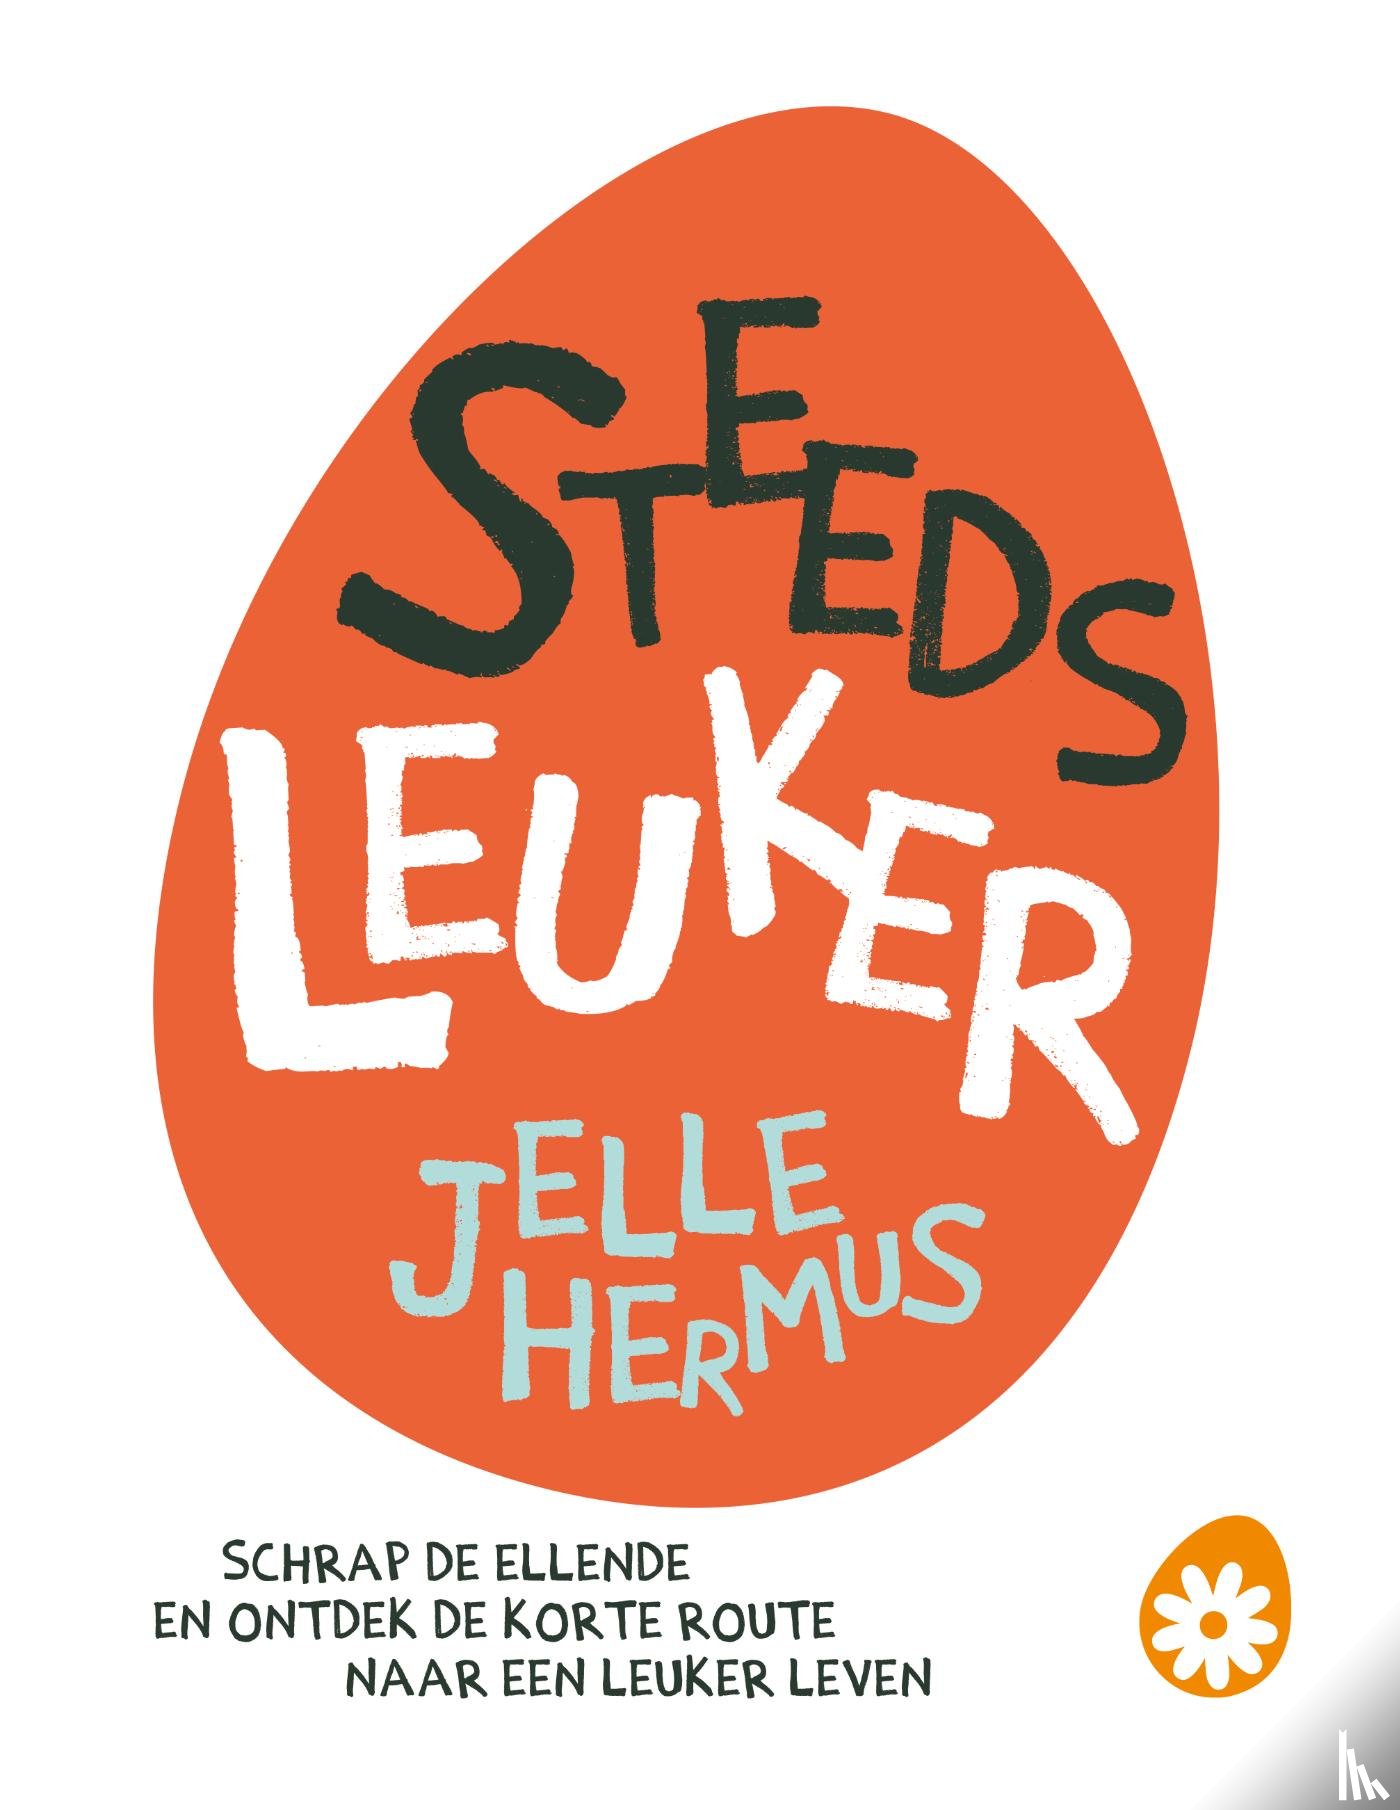 Hermus, Jelle - Steeds leuker